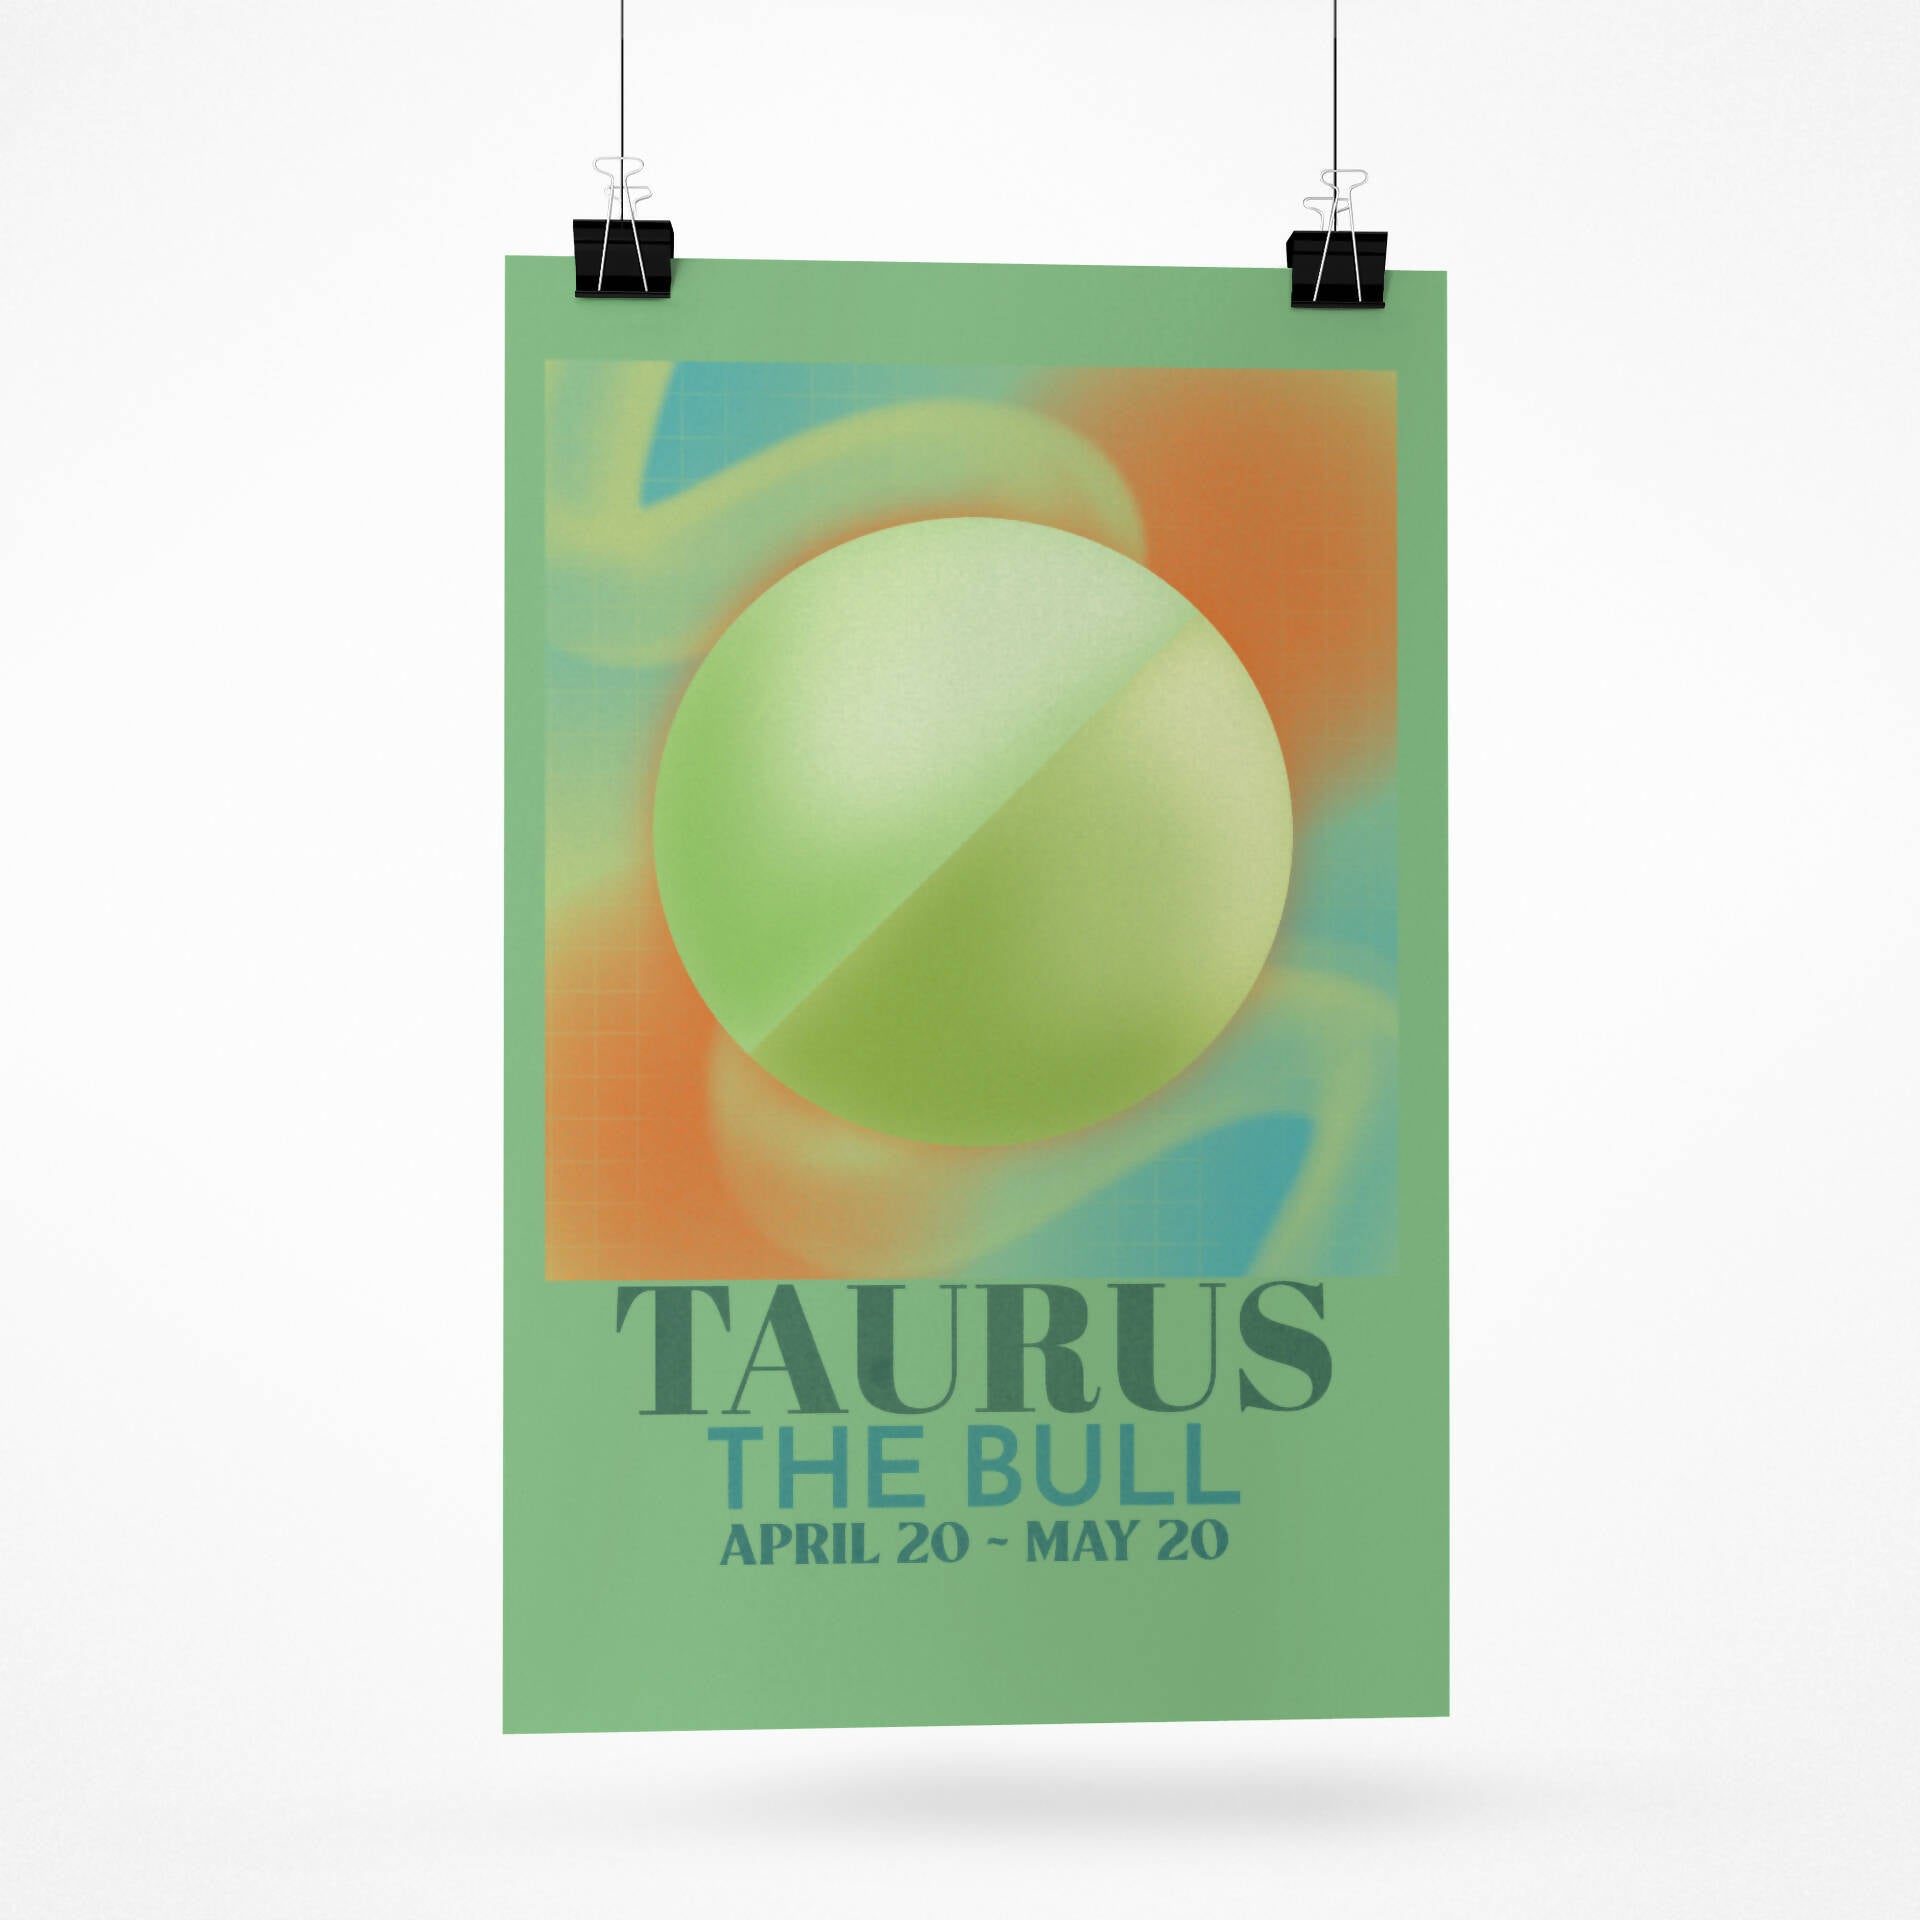 Taurus Zodiac Horoscope Star Sign Avant Garde Style Art Print A4 Framed no Mount